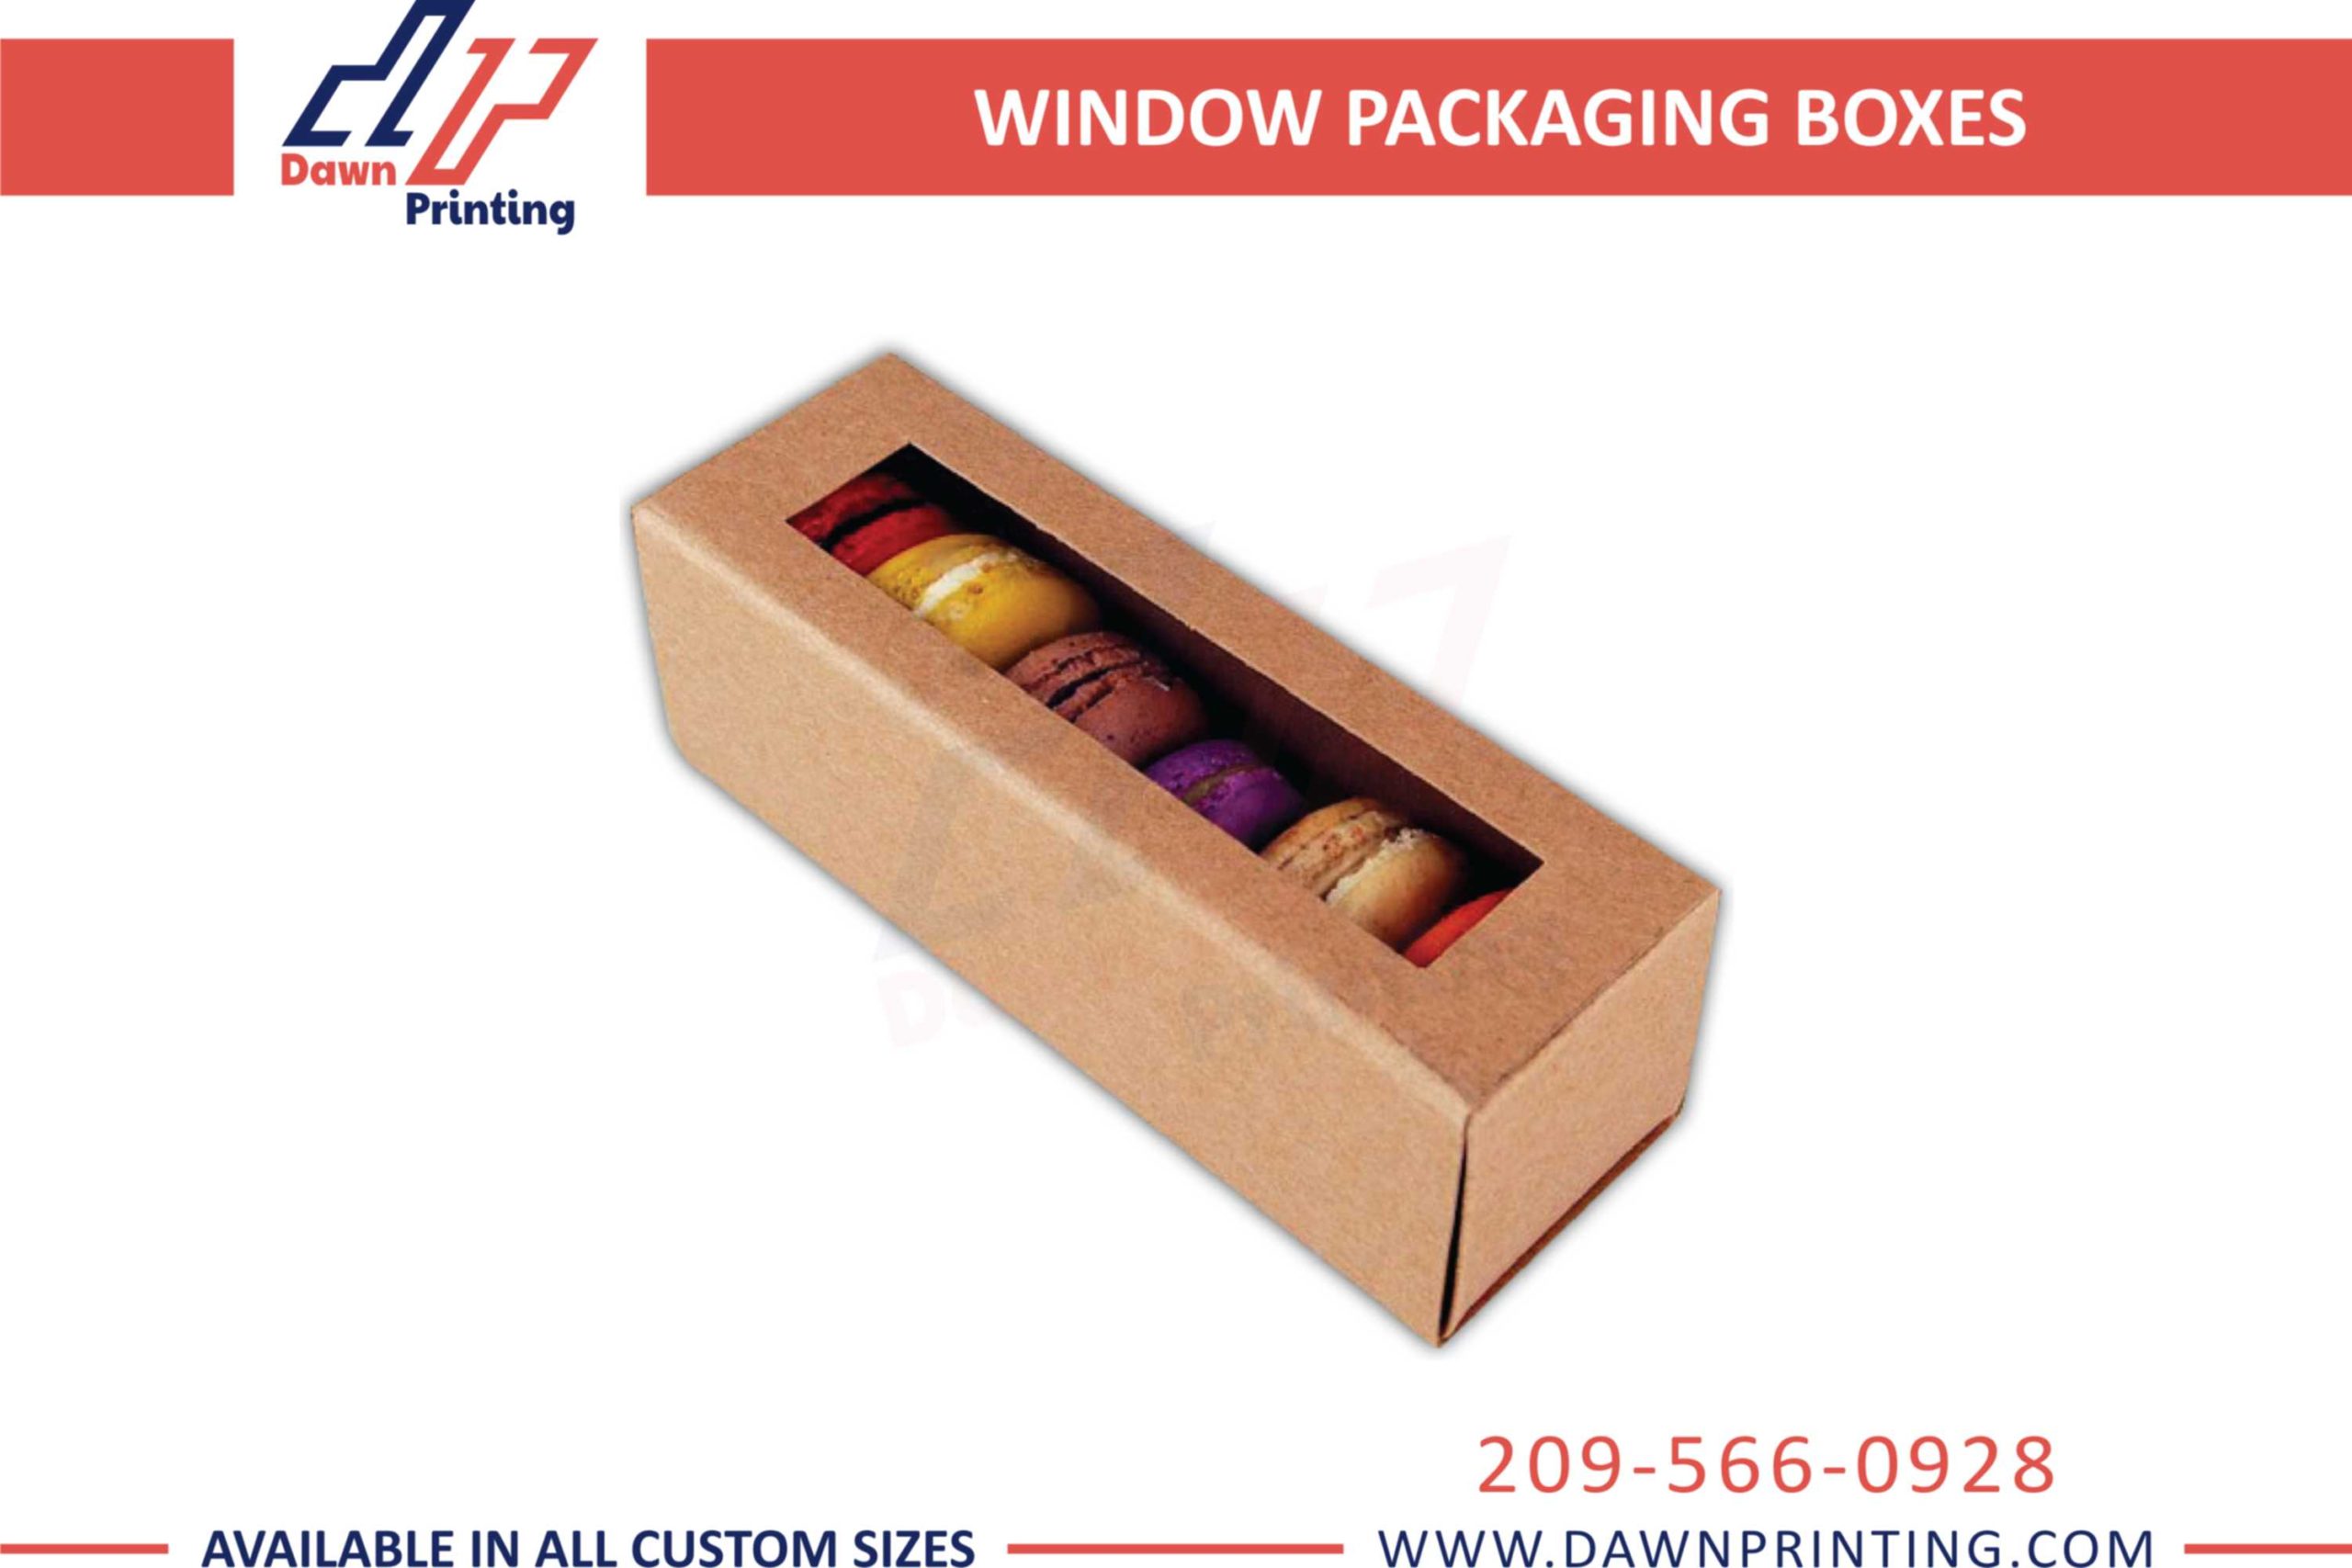 Custom Windows Packaging Box - Dawn Printing